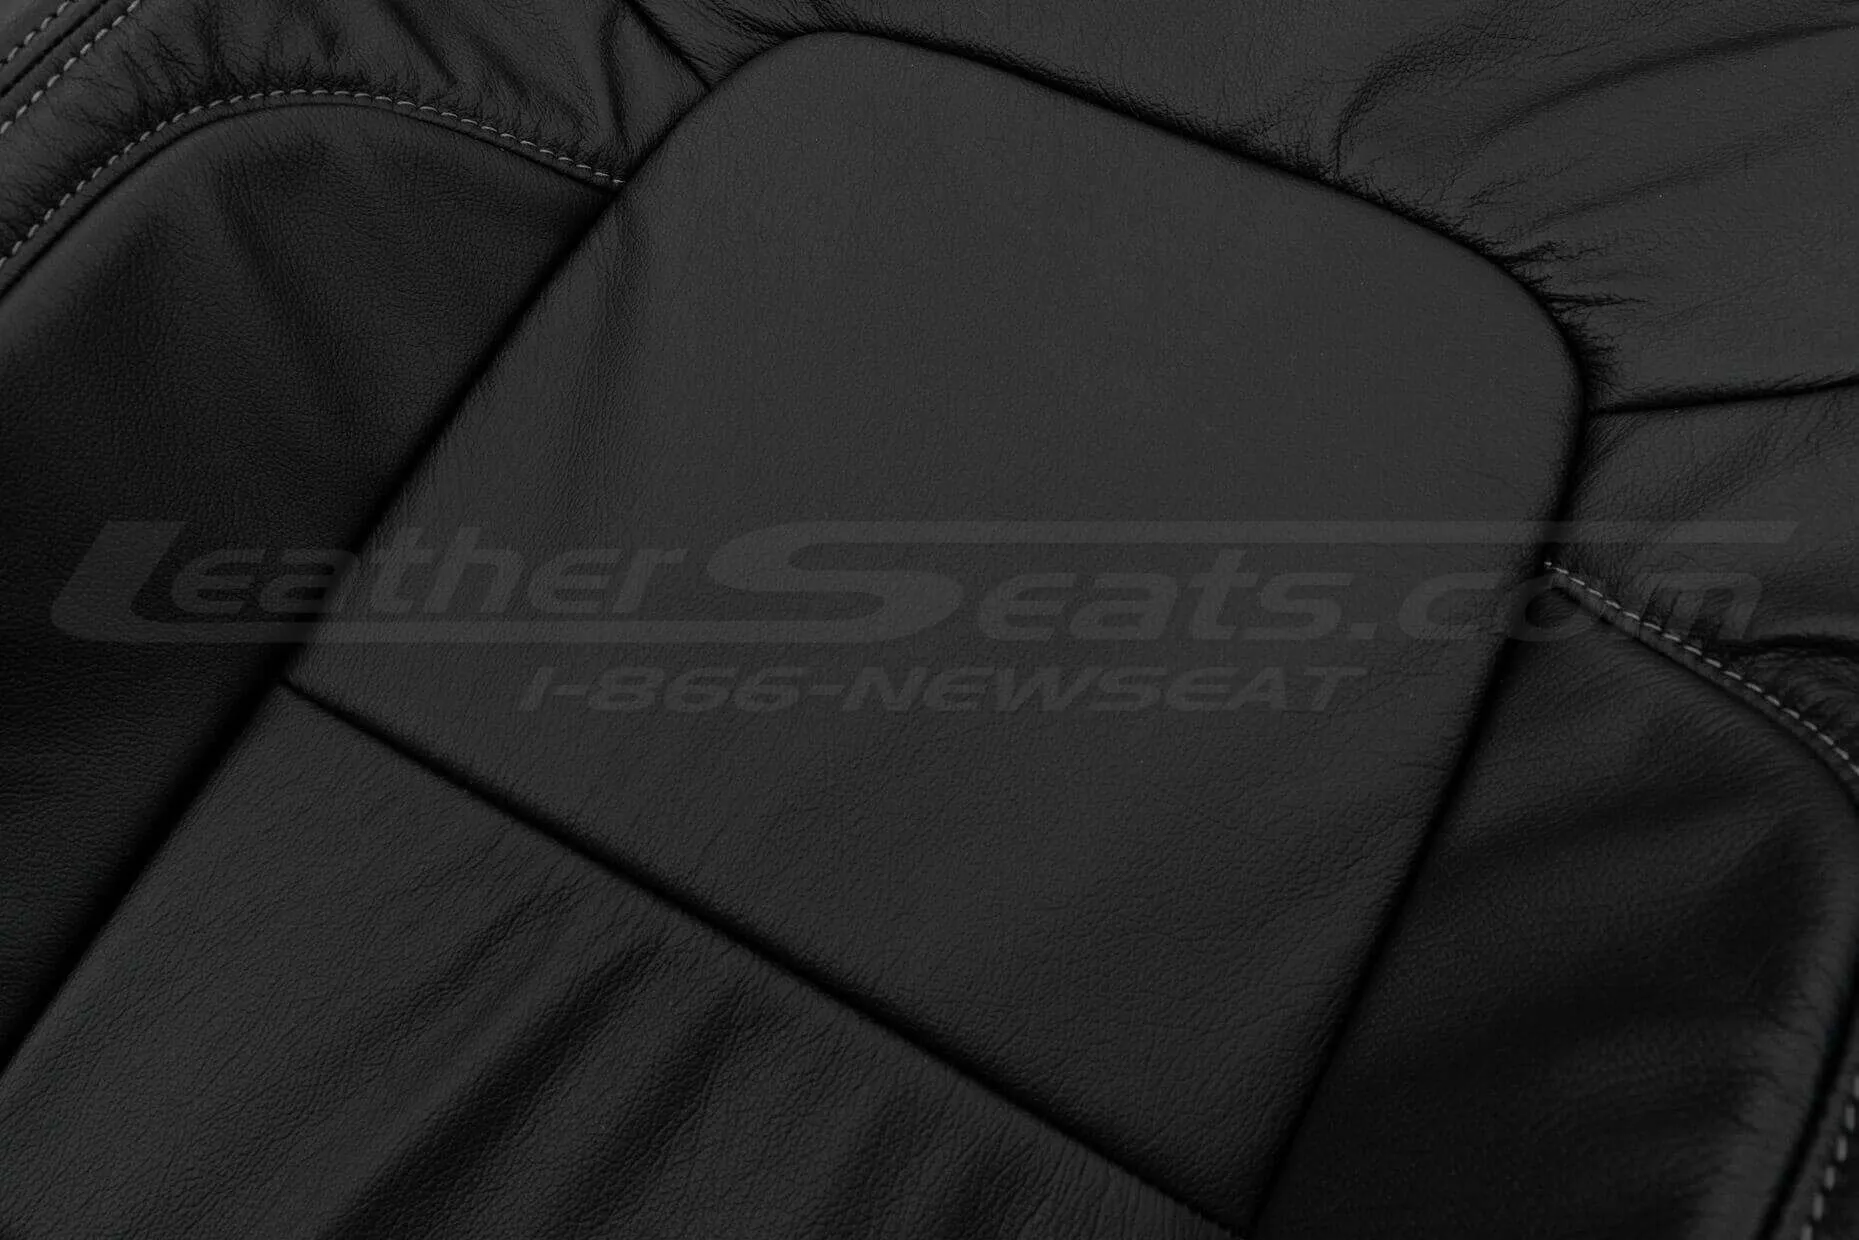 Backrest leather texture